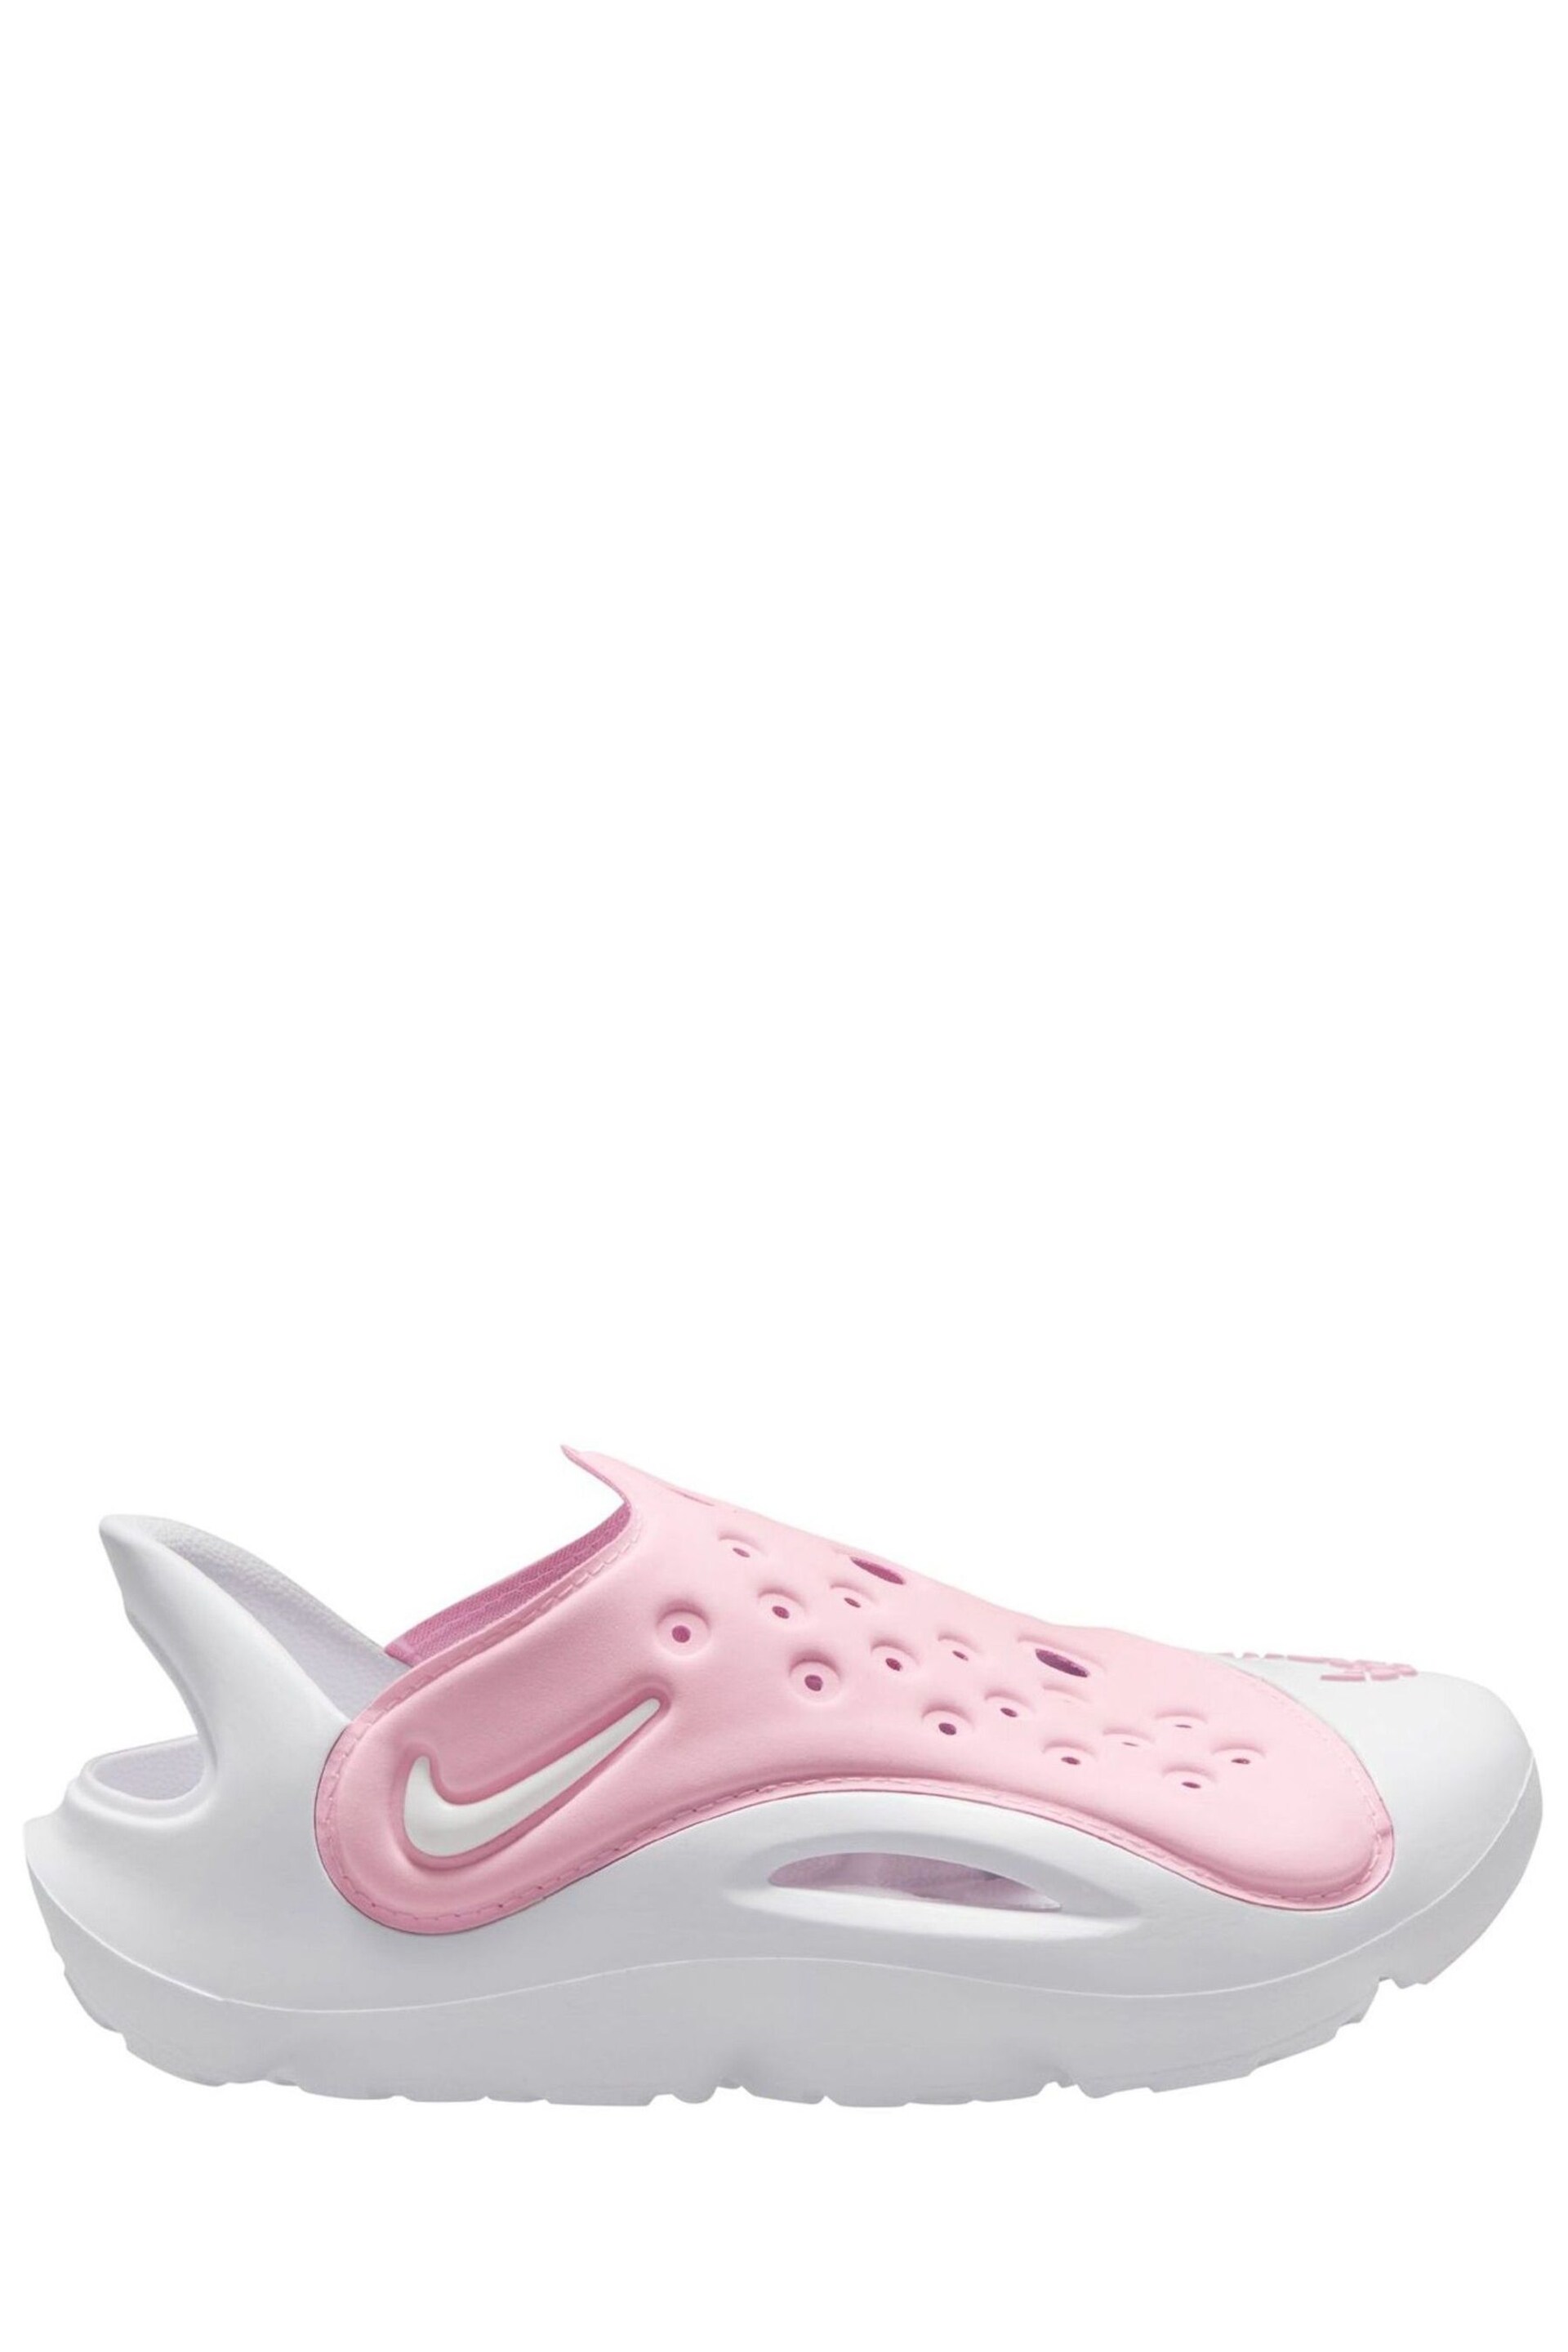 Nike Pink Sol Junior Pink Sandals - Image 1 of 4